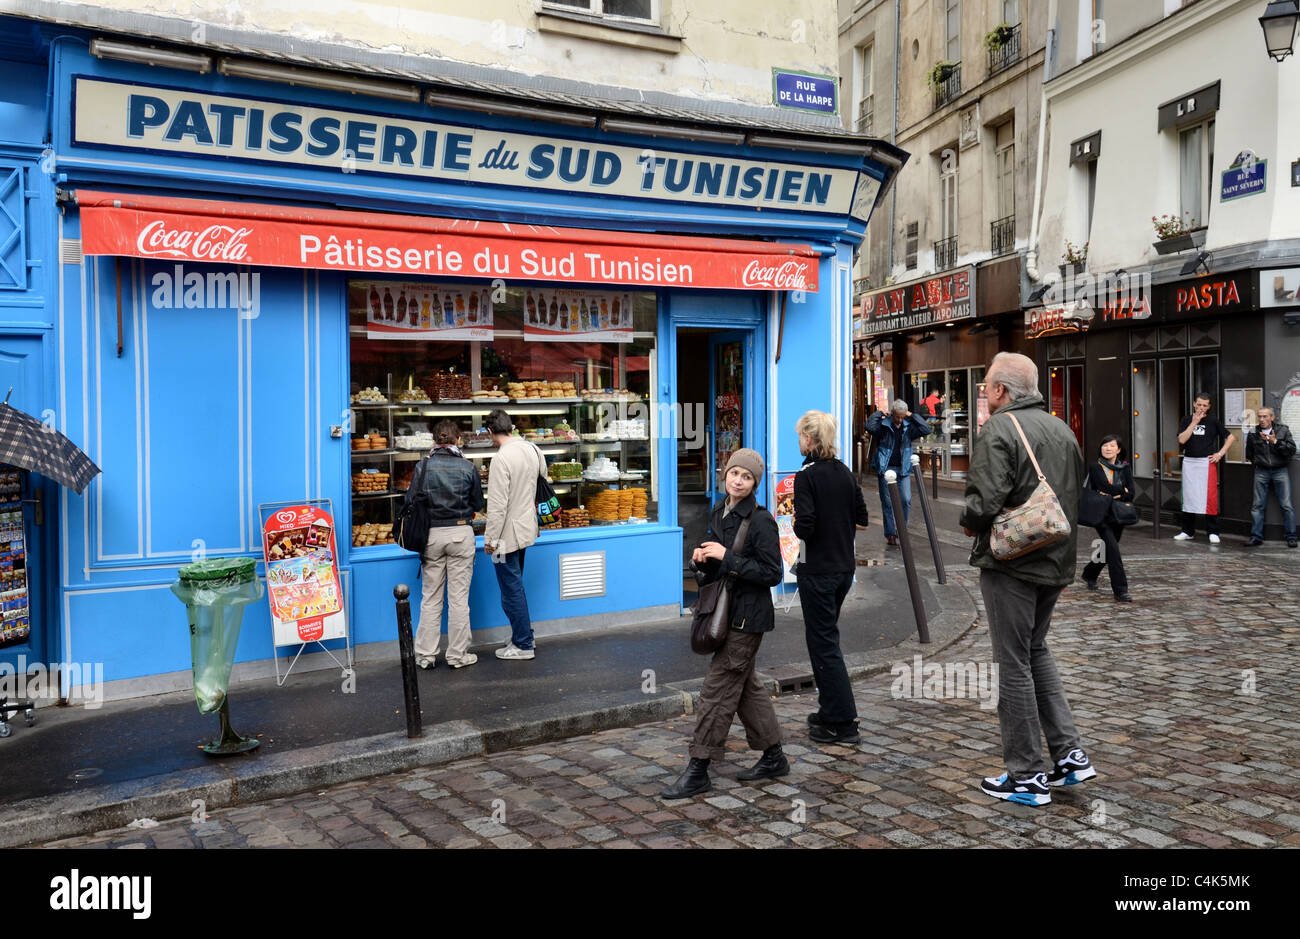 Patisserie du Sud Tunisien on the Rue de la Harpe in the Latin Quarter of Paris, France. Stock Photo